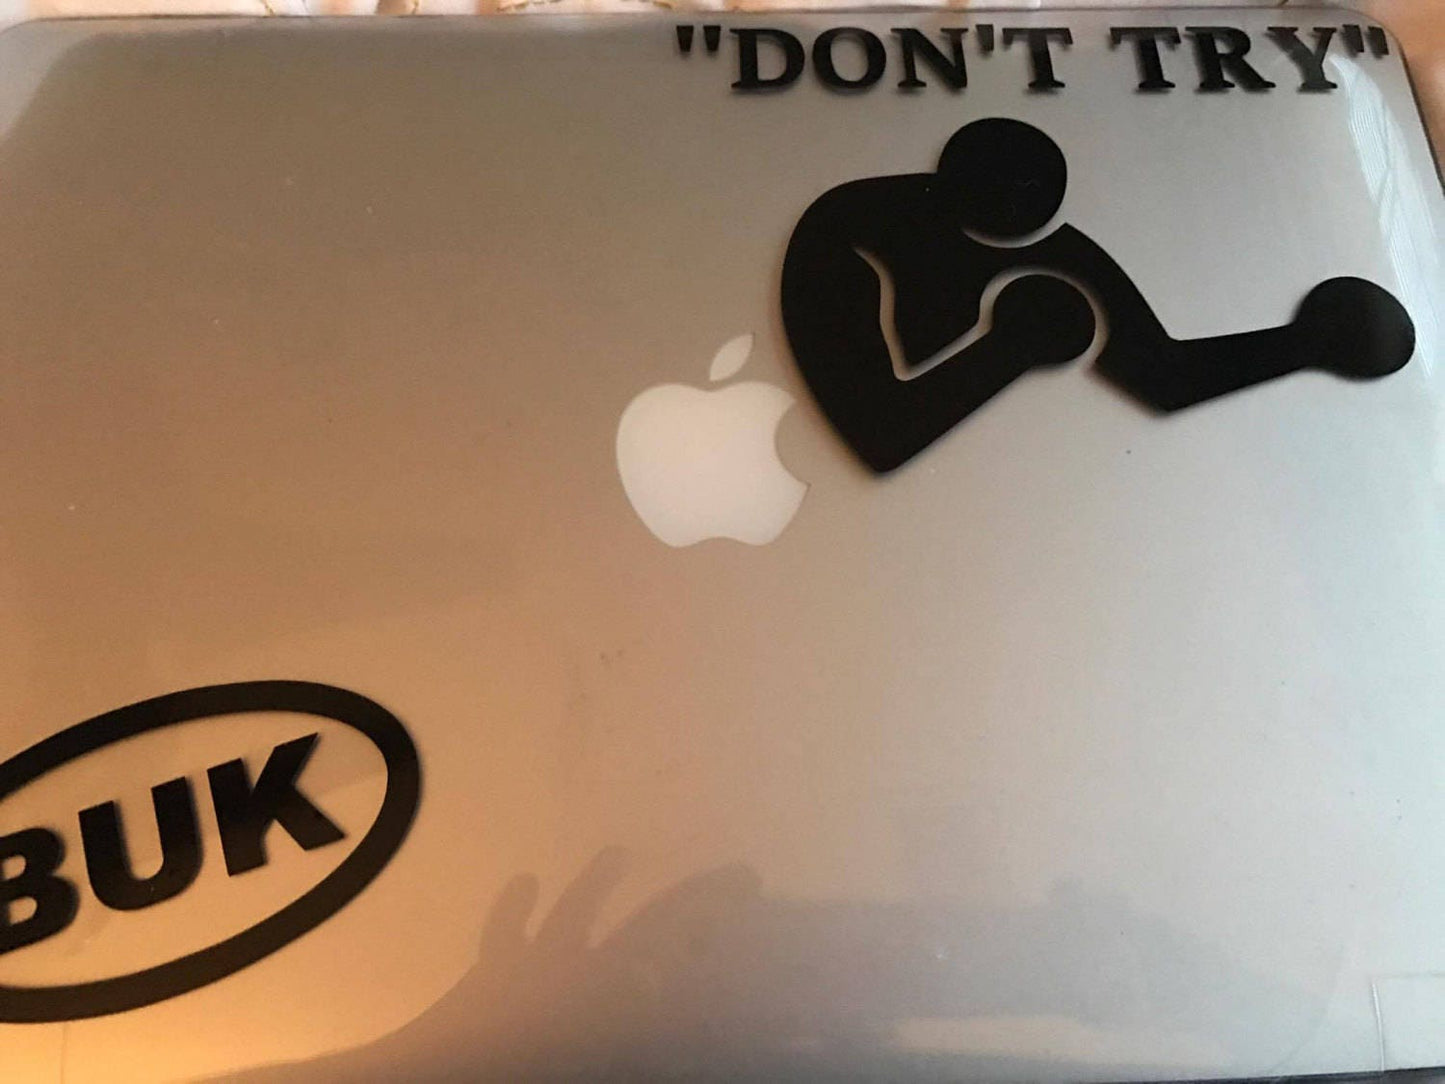 Charles Bukowski's "Don't Try" Gravestone Boxer Rub-On Vinyl Die Cut Decal Bumper Sticker Car Laptop